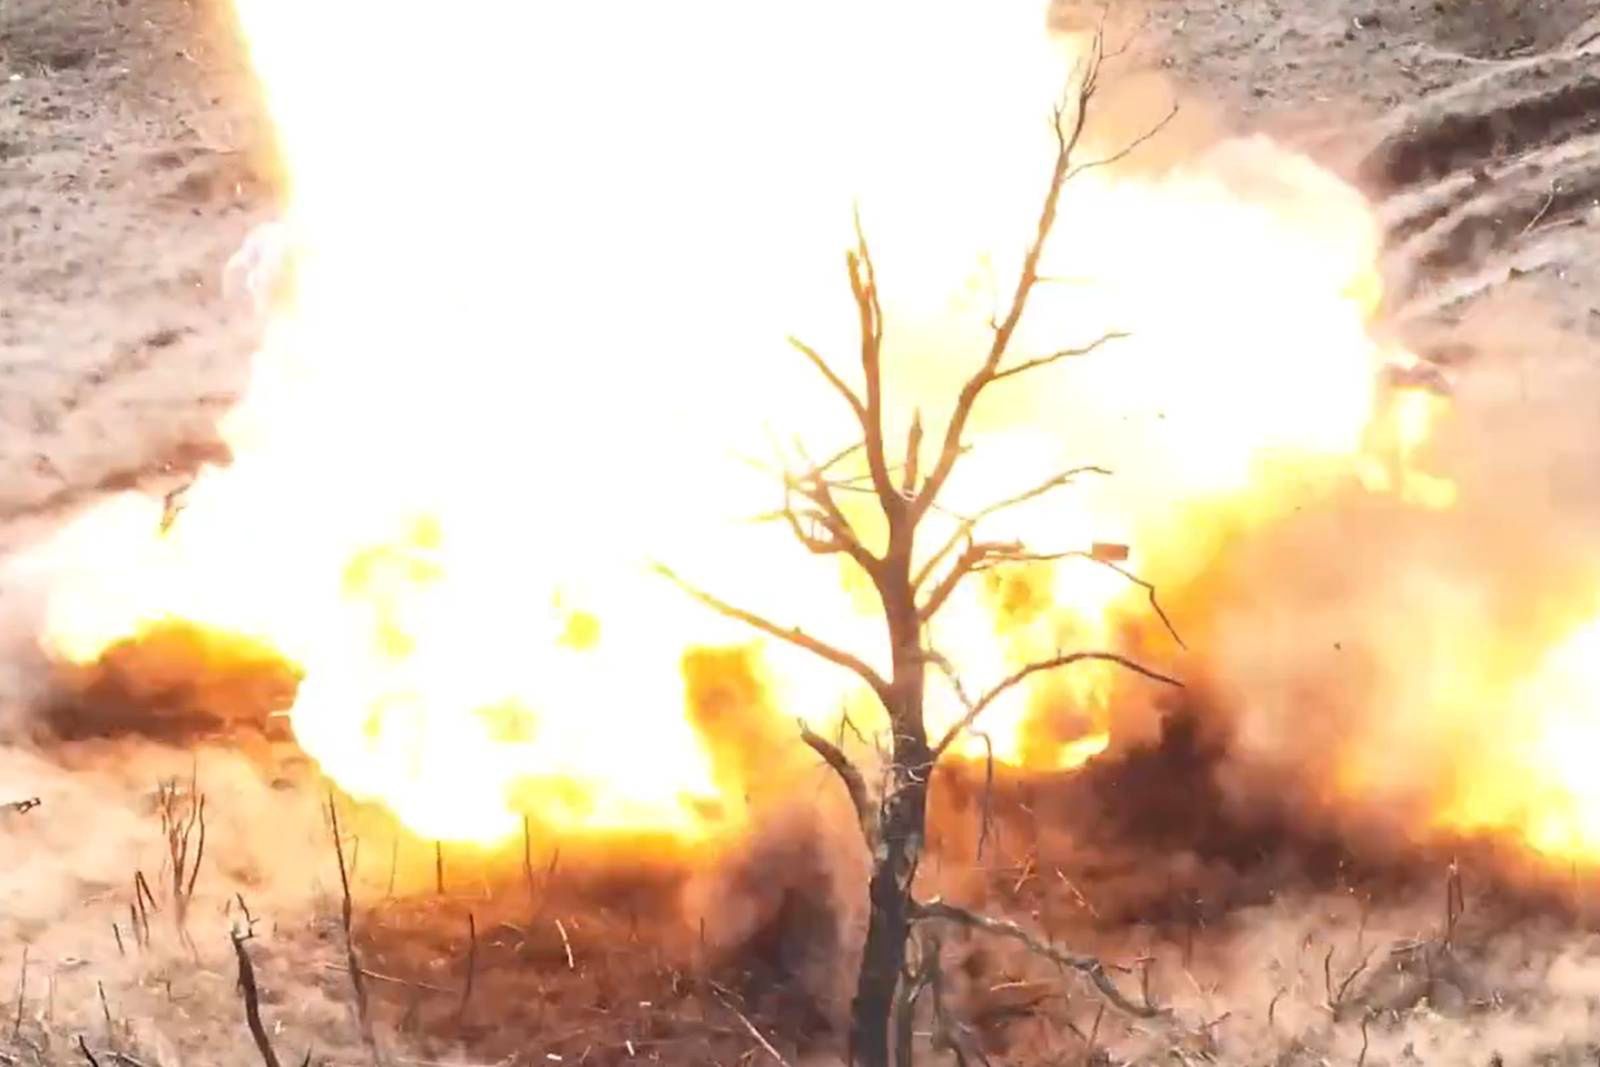 Spectacular drone strike by Ukraine turns Russian tank into fireball